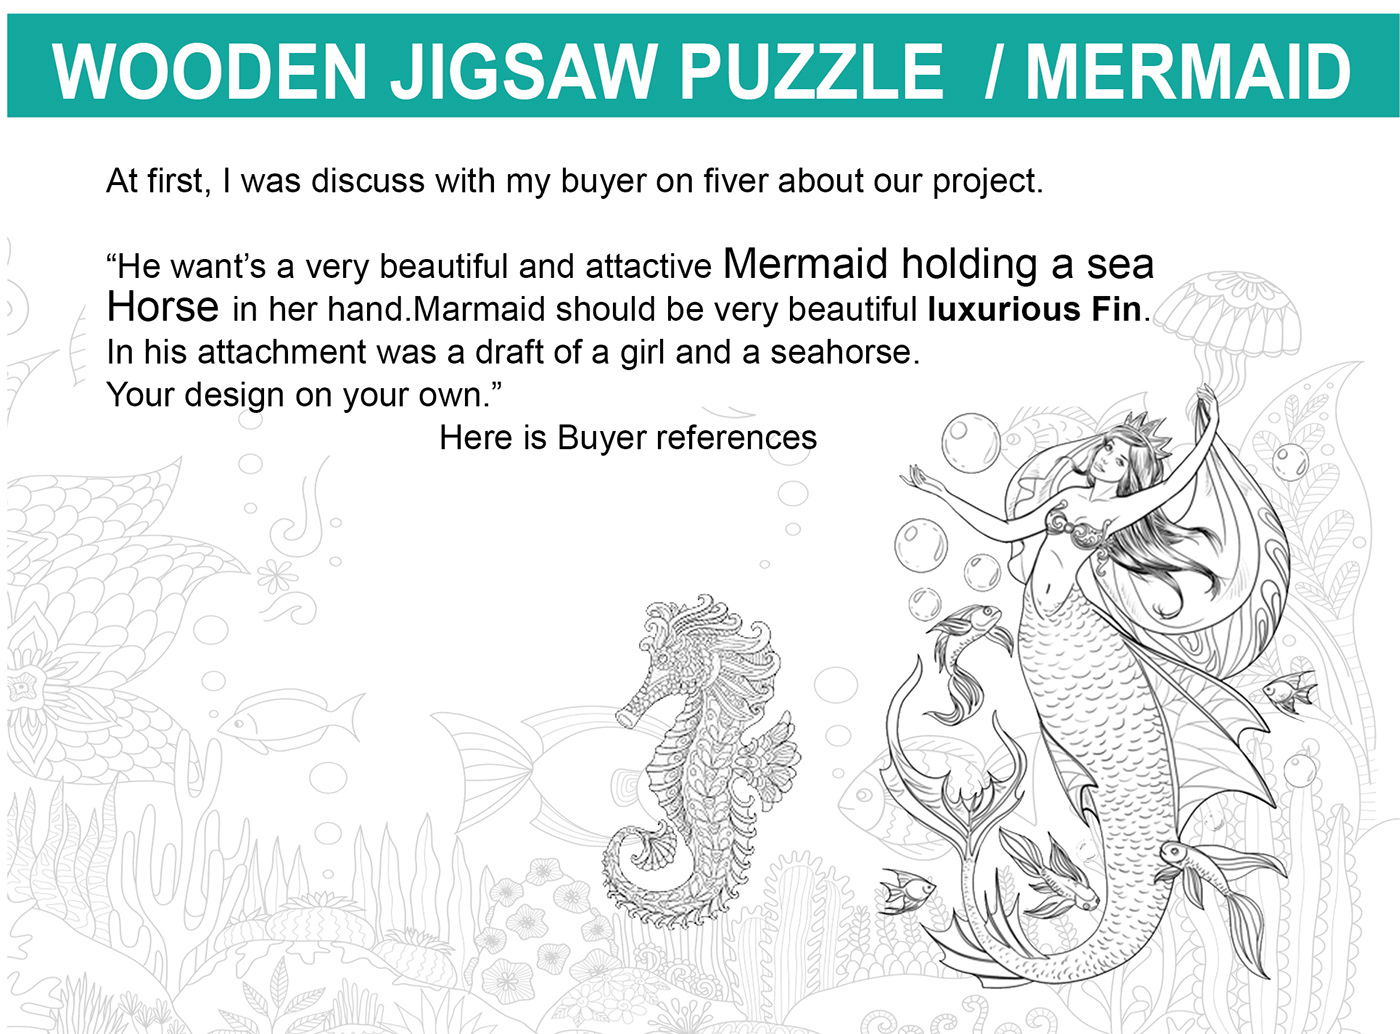 coloring book Diecut mermaid illustration Vector Illustration jigsaw puzzle MERMAID PUZZLE puzzle die cutting wooden jigsaw